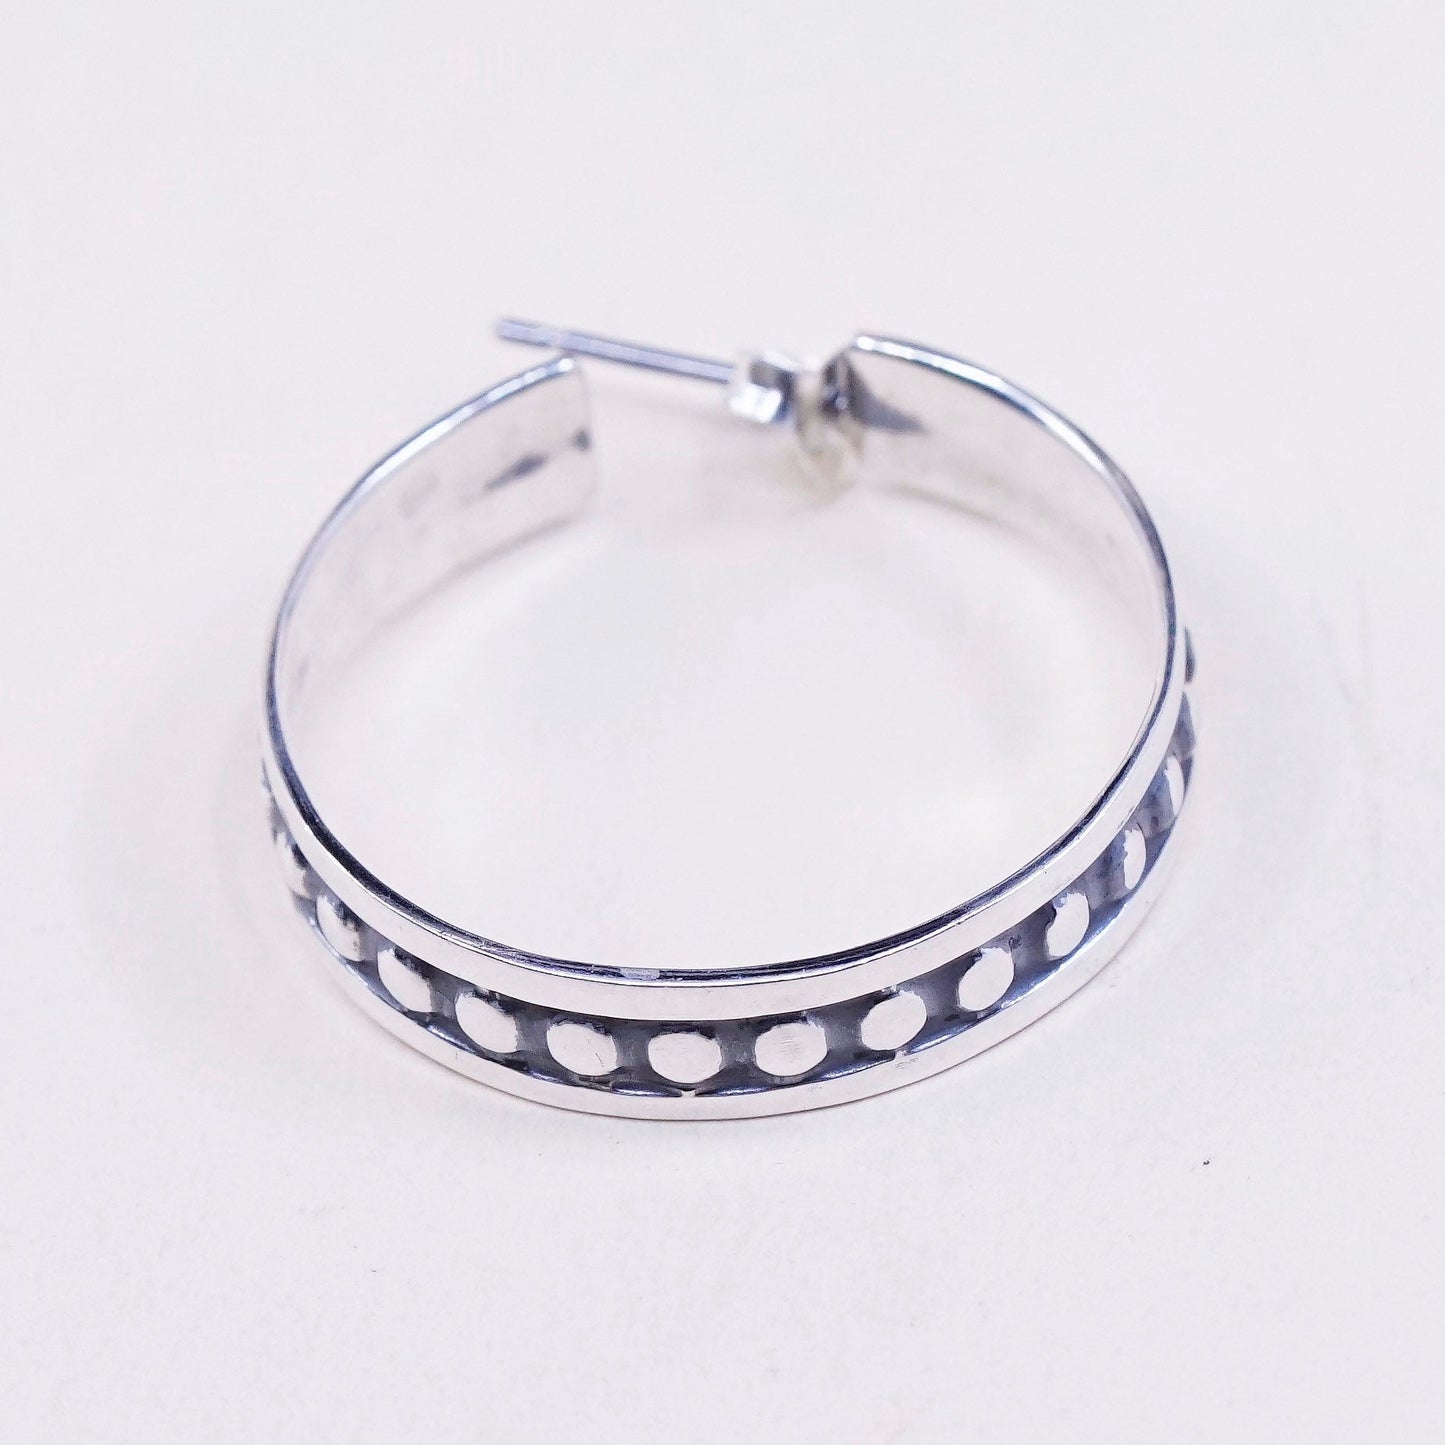 1”, Vintage mexico sterling silver wide hoops, 925 huggie earrings with beads